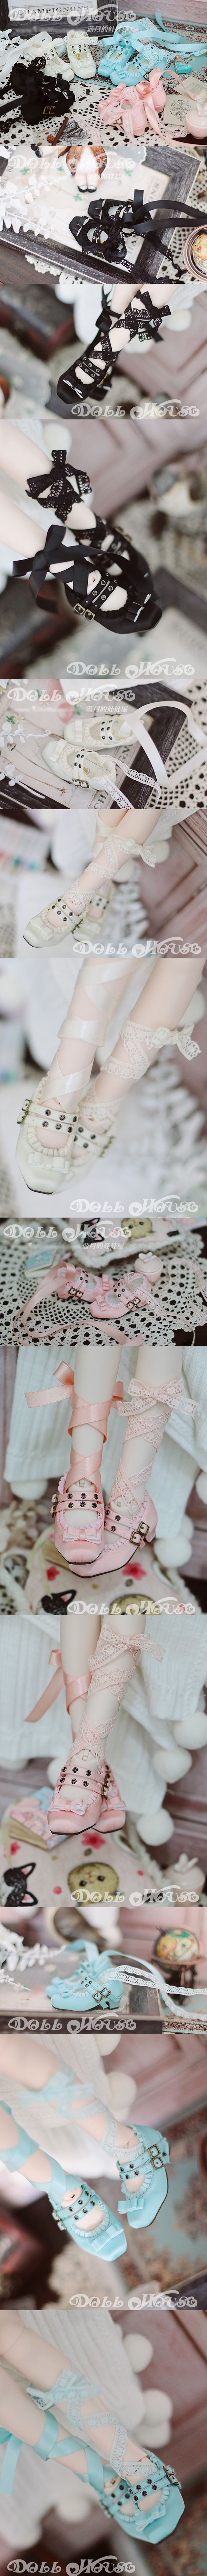 1/4 Girl Pink/Blue/White/Black Ballet Shoes